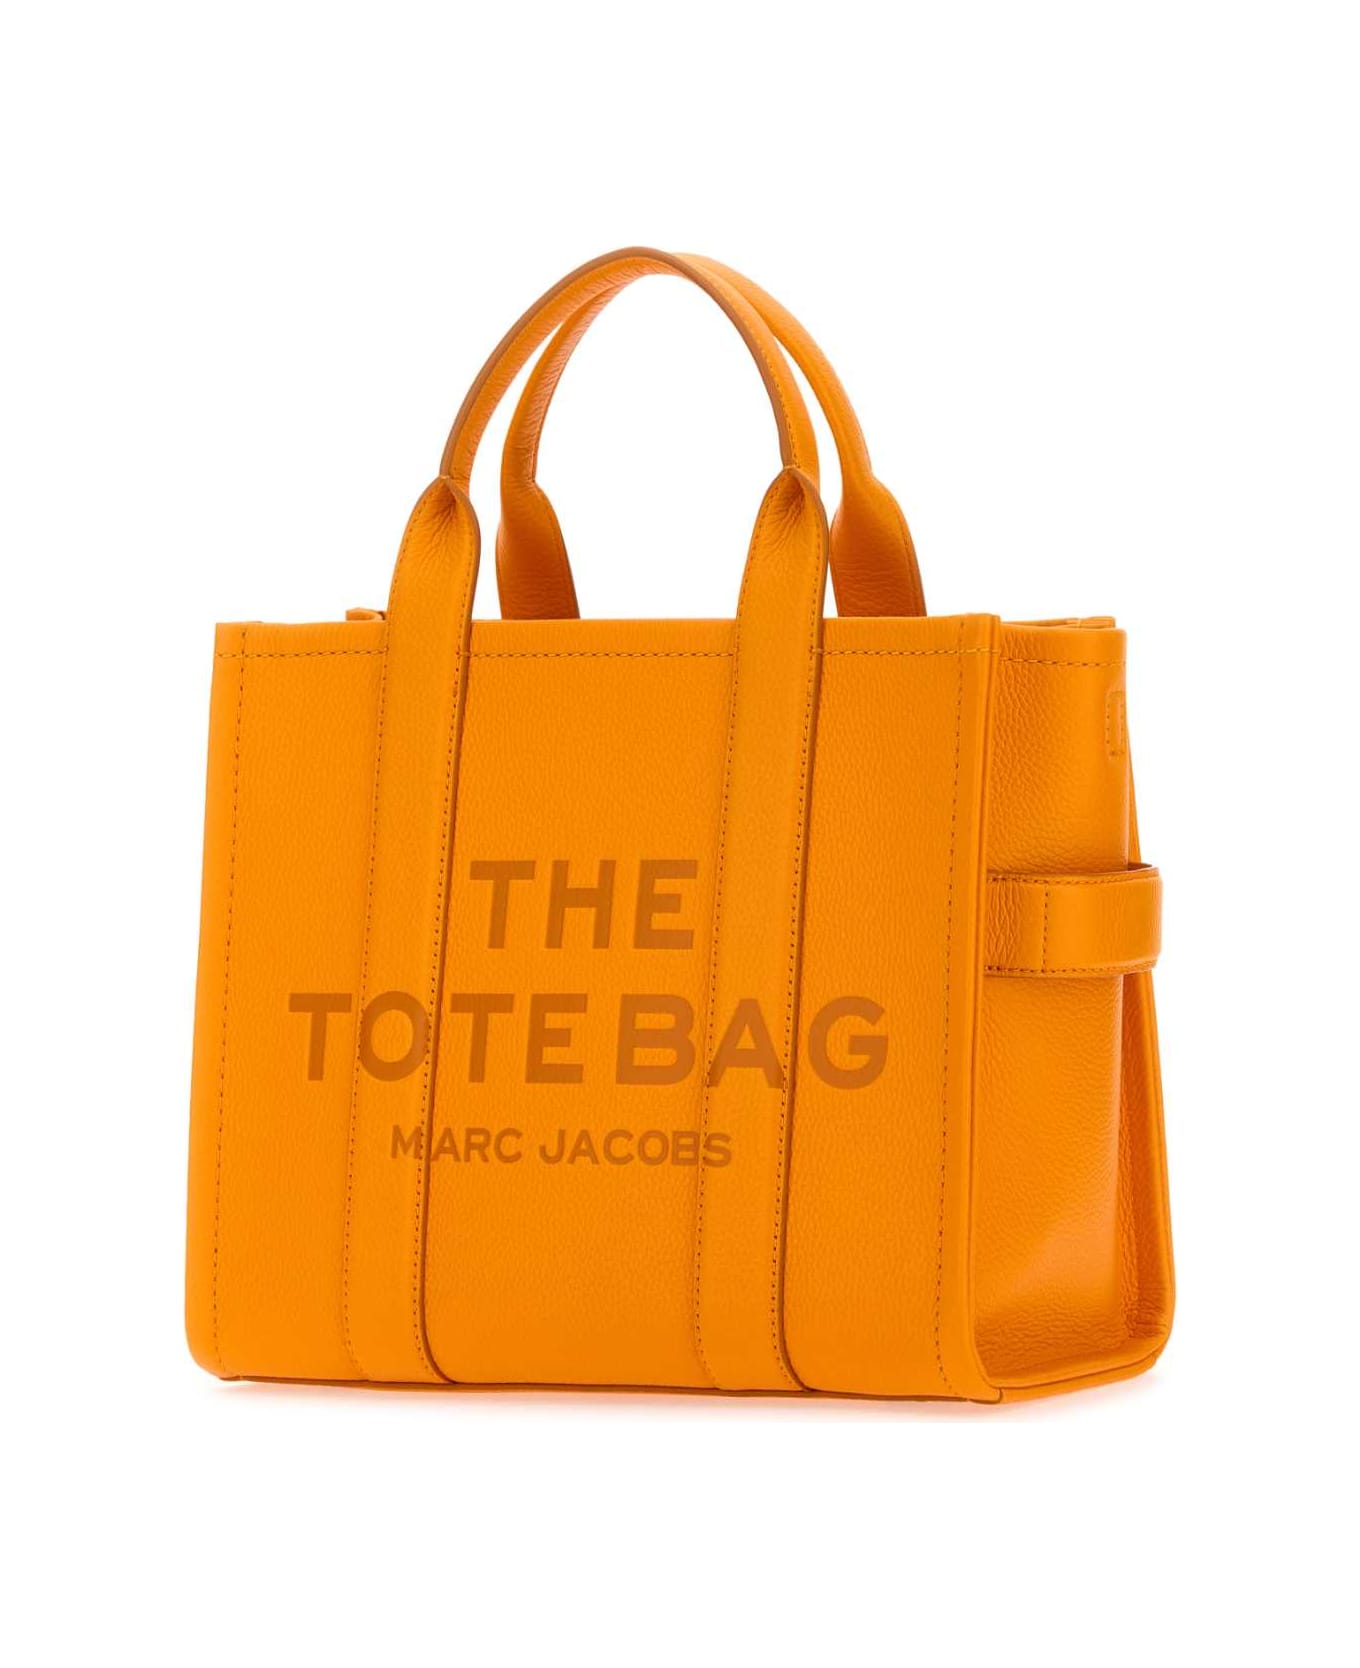 Marc Jacobs Orange Leather Medium The Tote Bag Handbag - TANGERINE